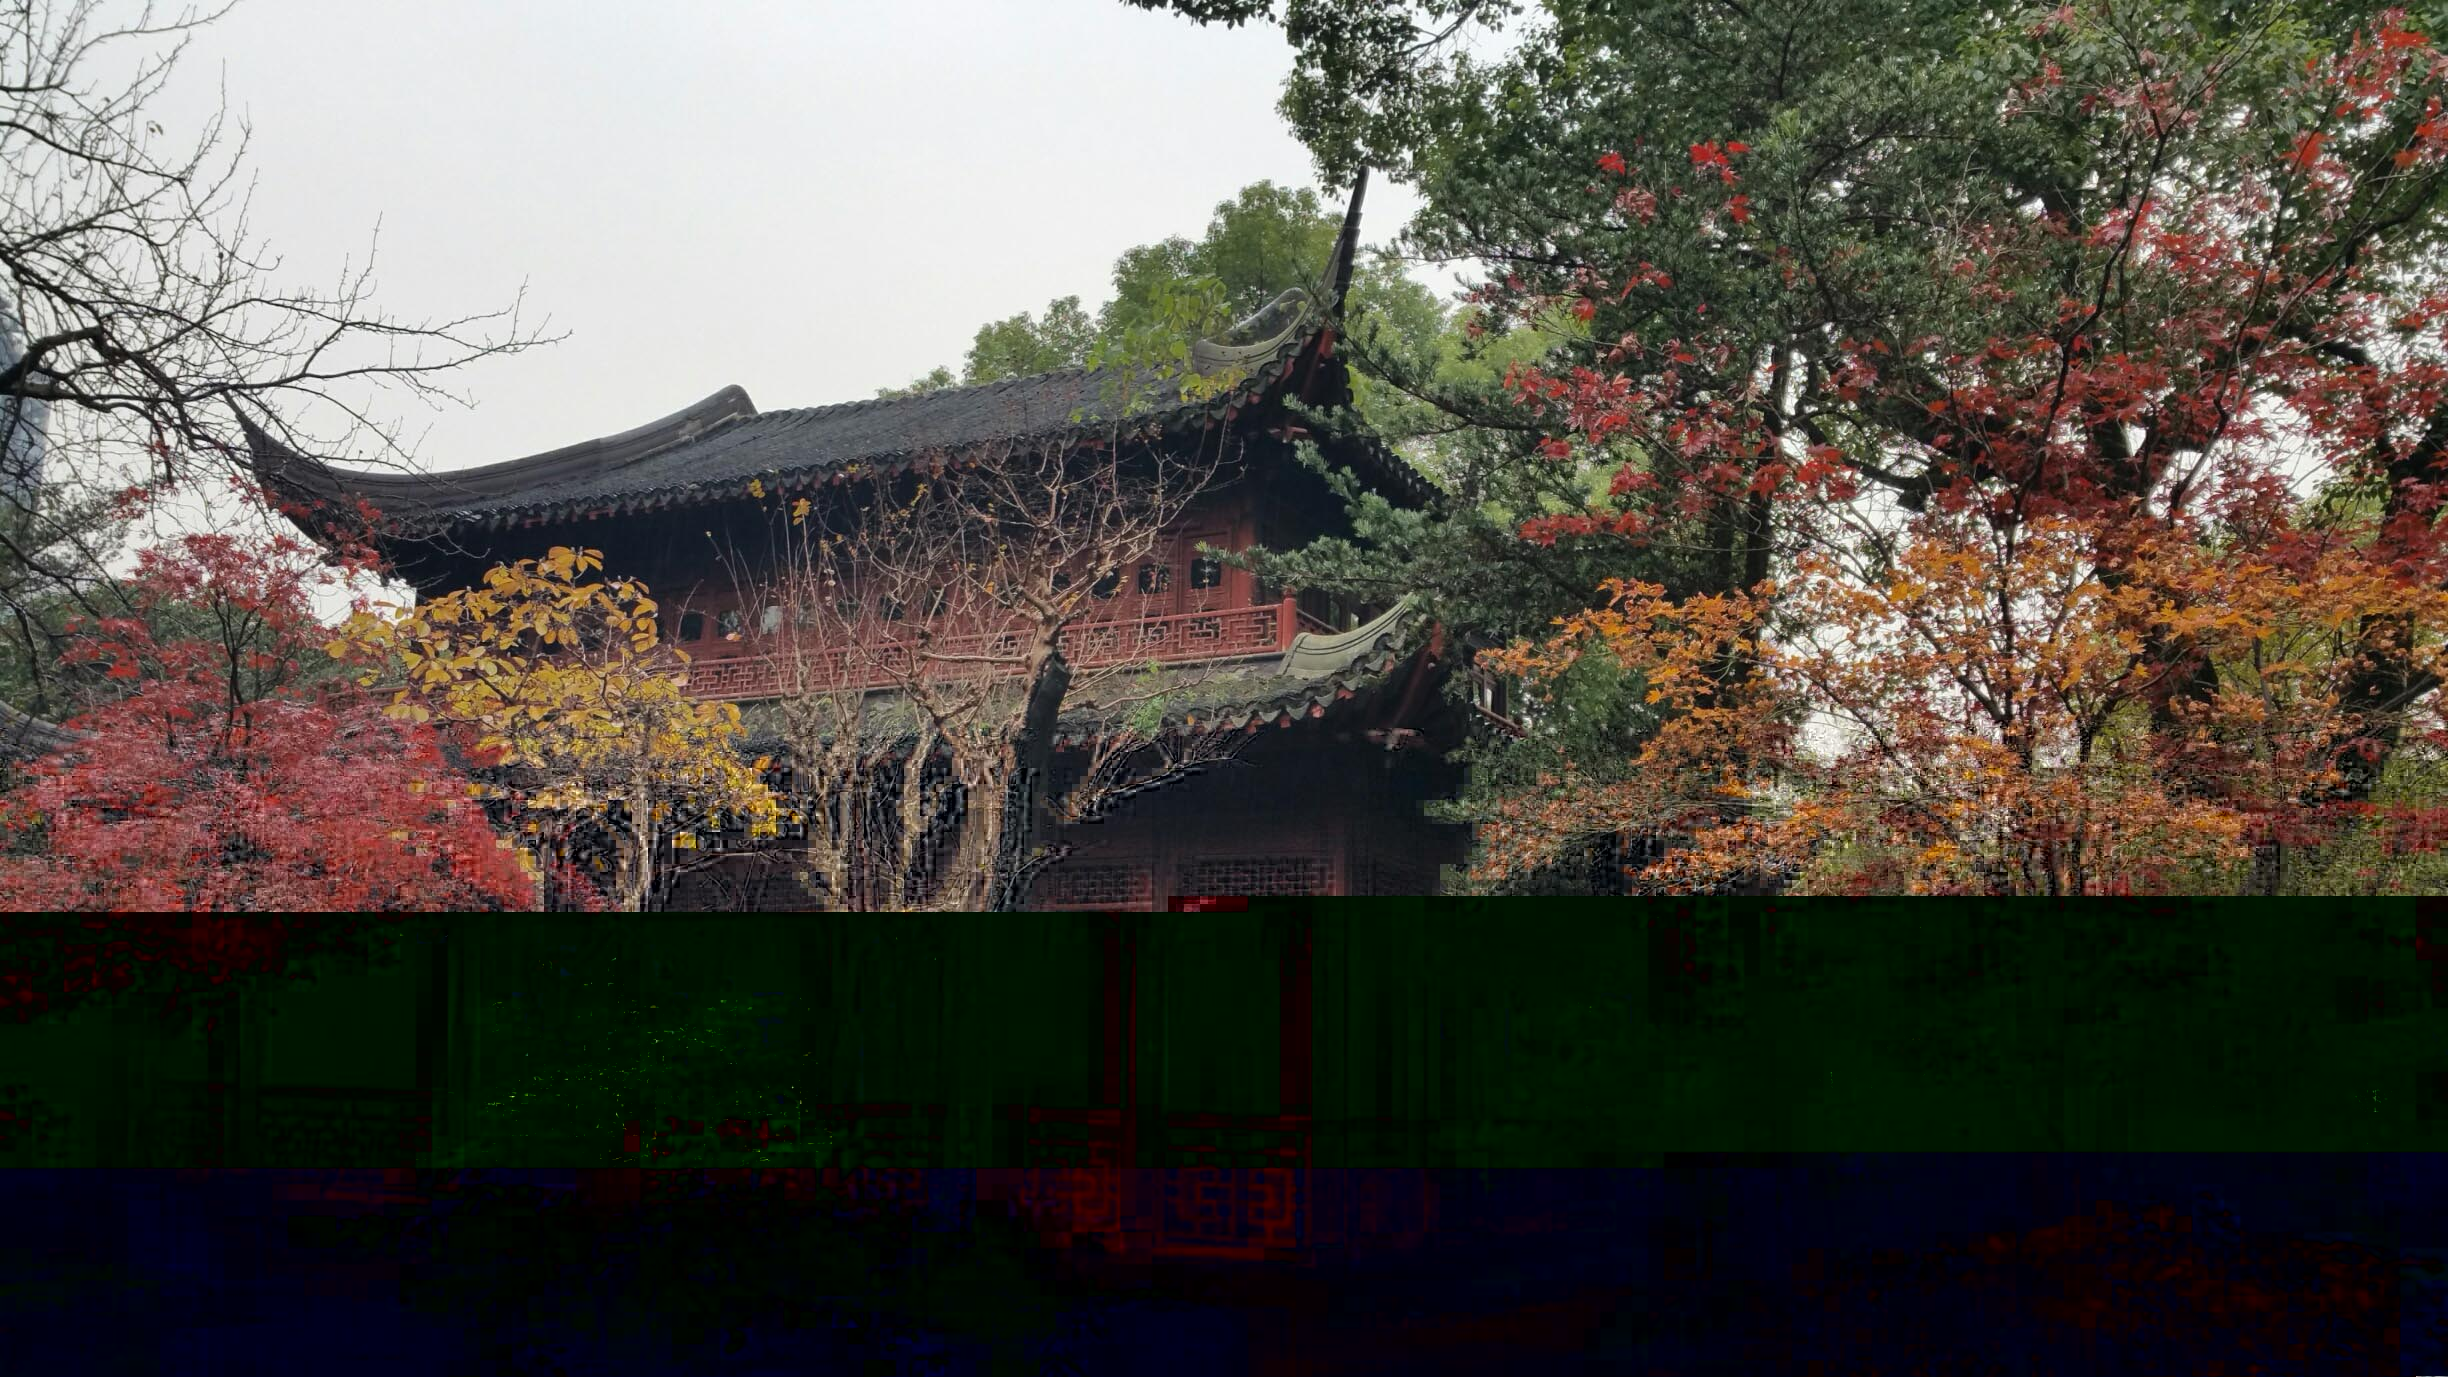 "Yuyuan Garden"